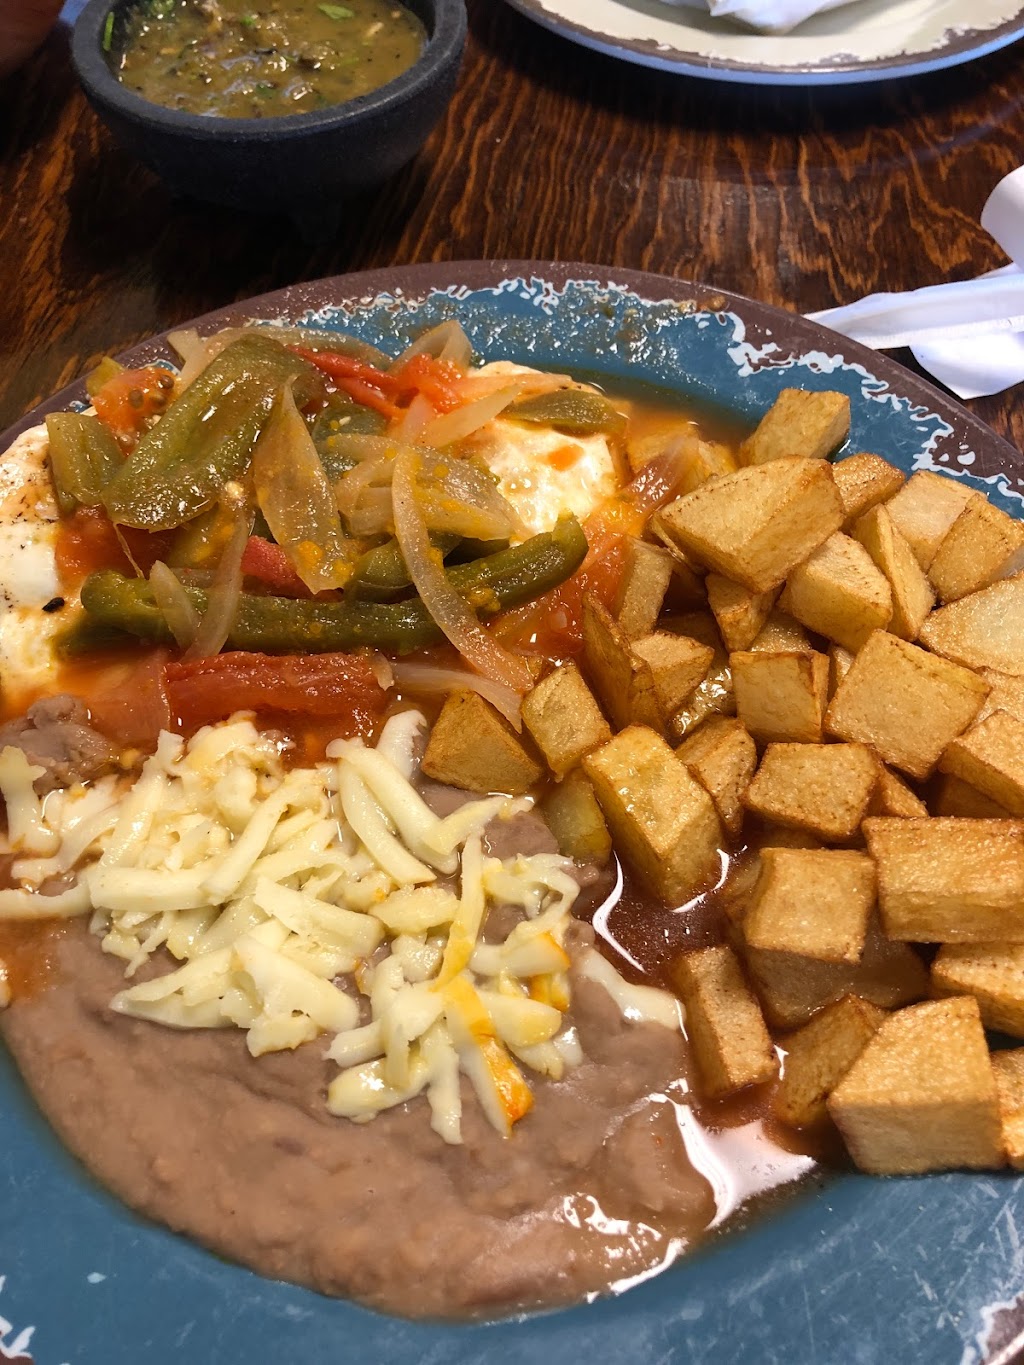 Fantastic Mexican Kitchen | 12302 Montana Ave, El Paso, TX 79938, USA | Phone: (915) 235-4009